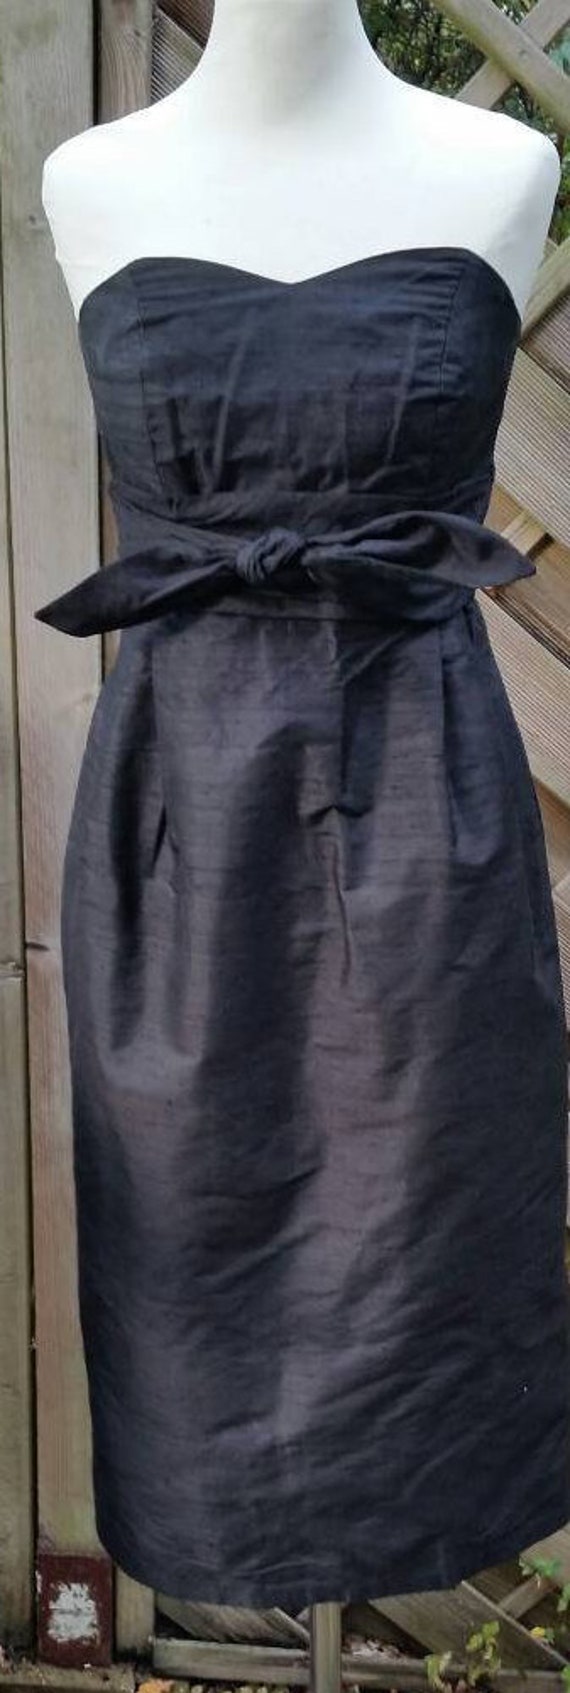 Black strapless evening dress UK size 8 - image 2